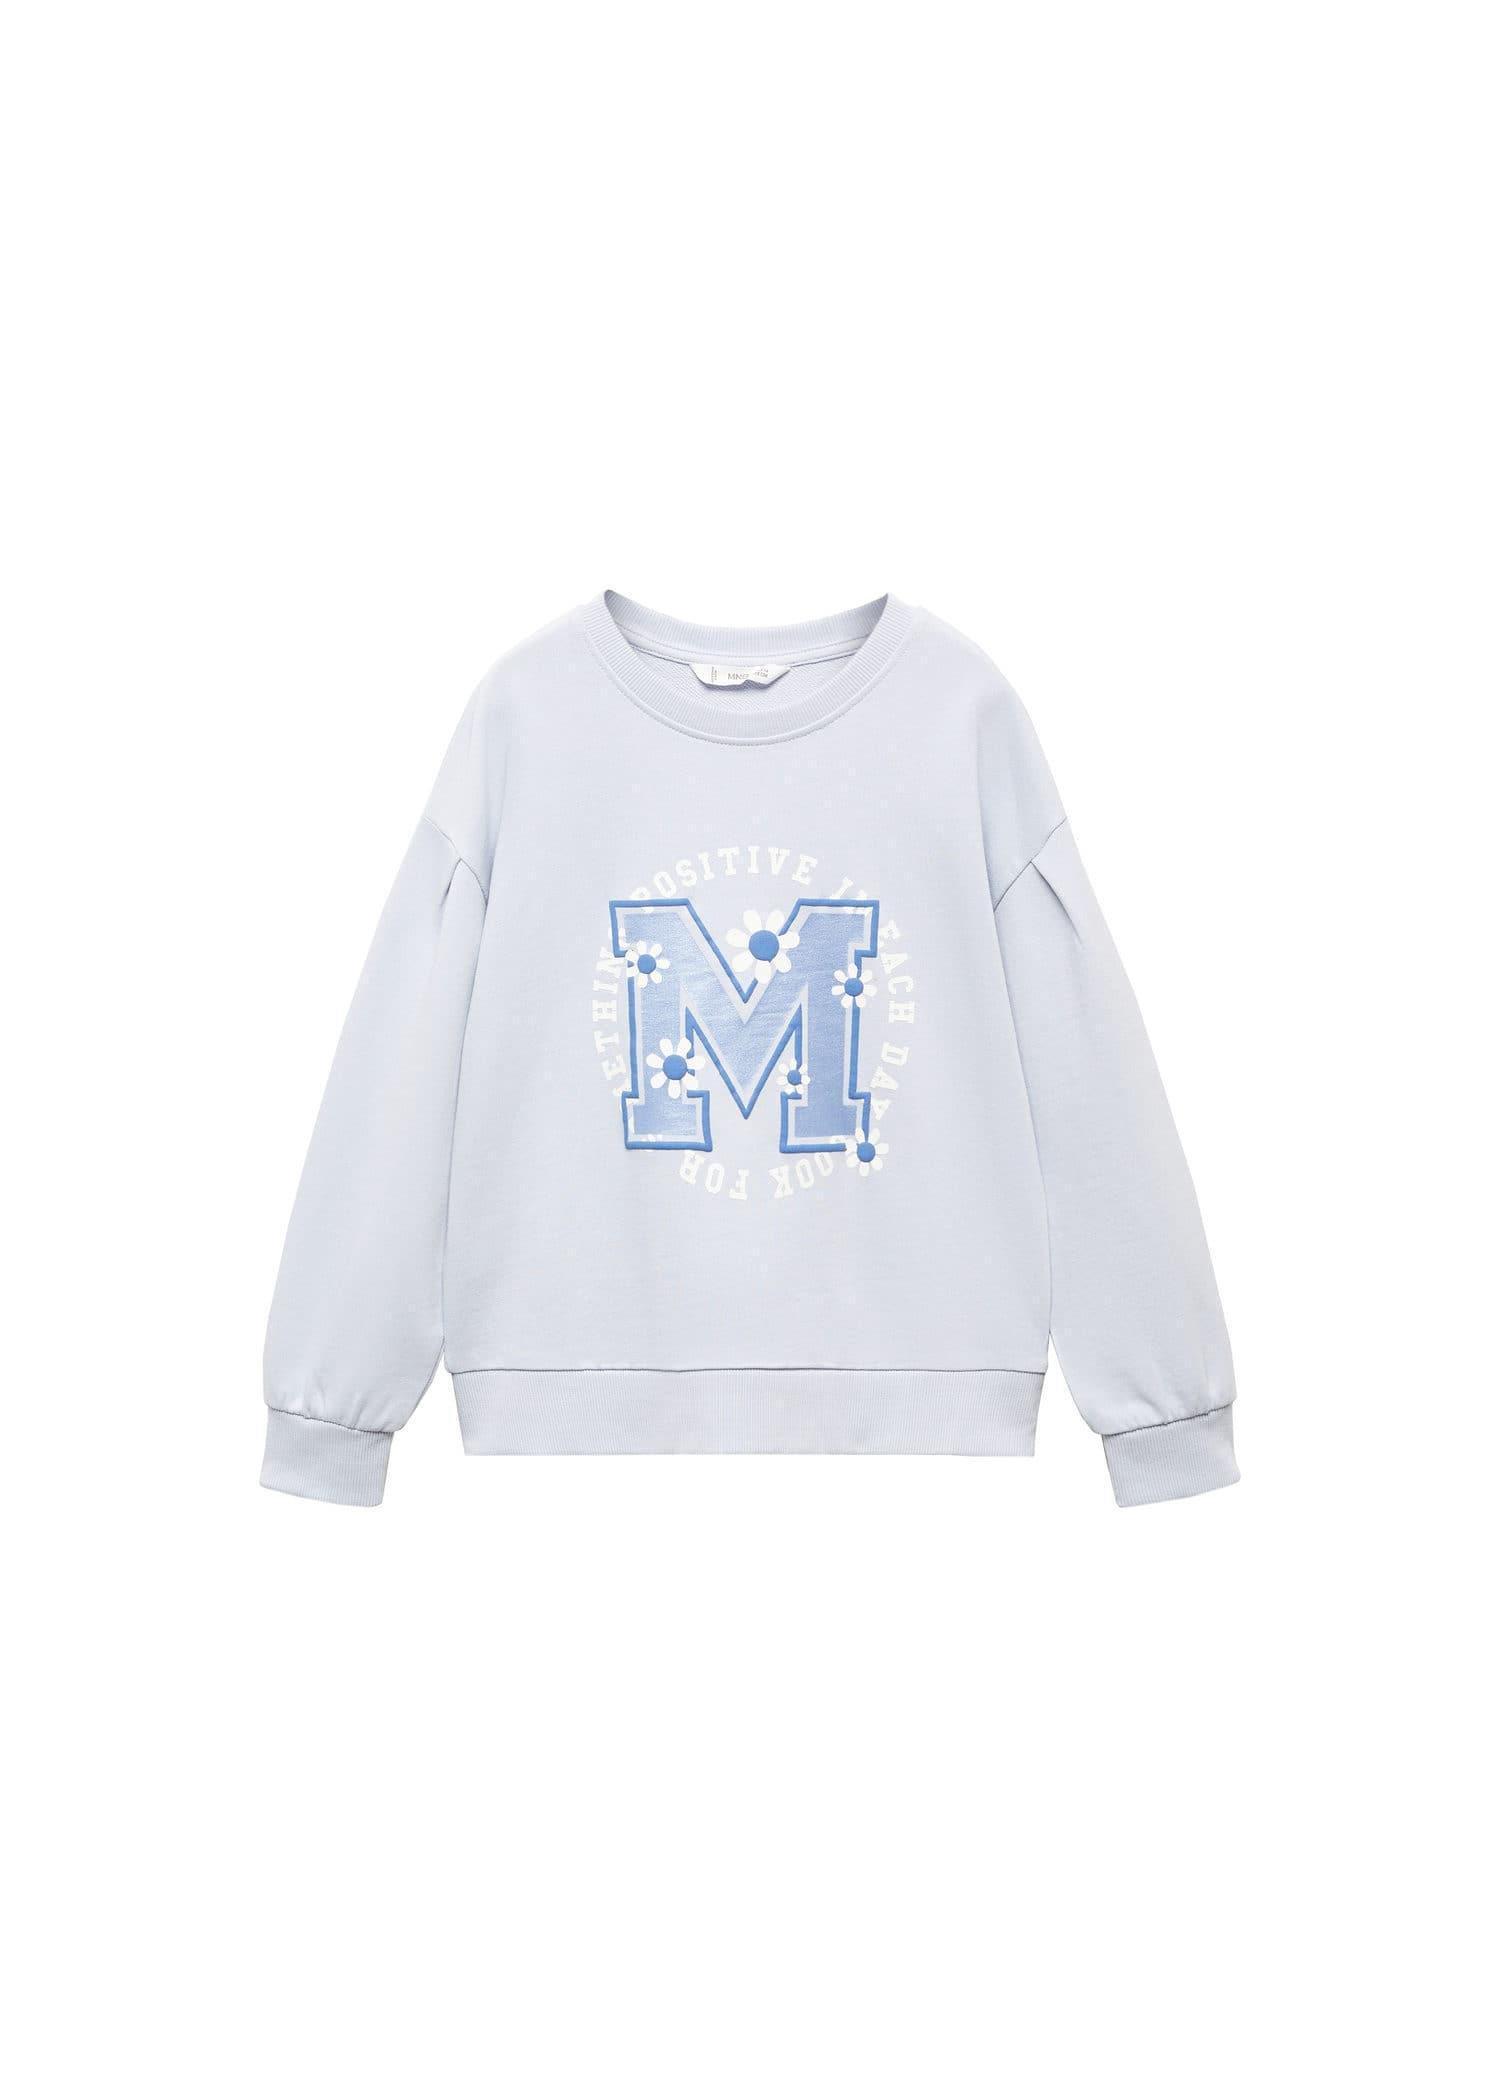 Mango - Blue Printed Cotton Sweatshirt, Kids Girls